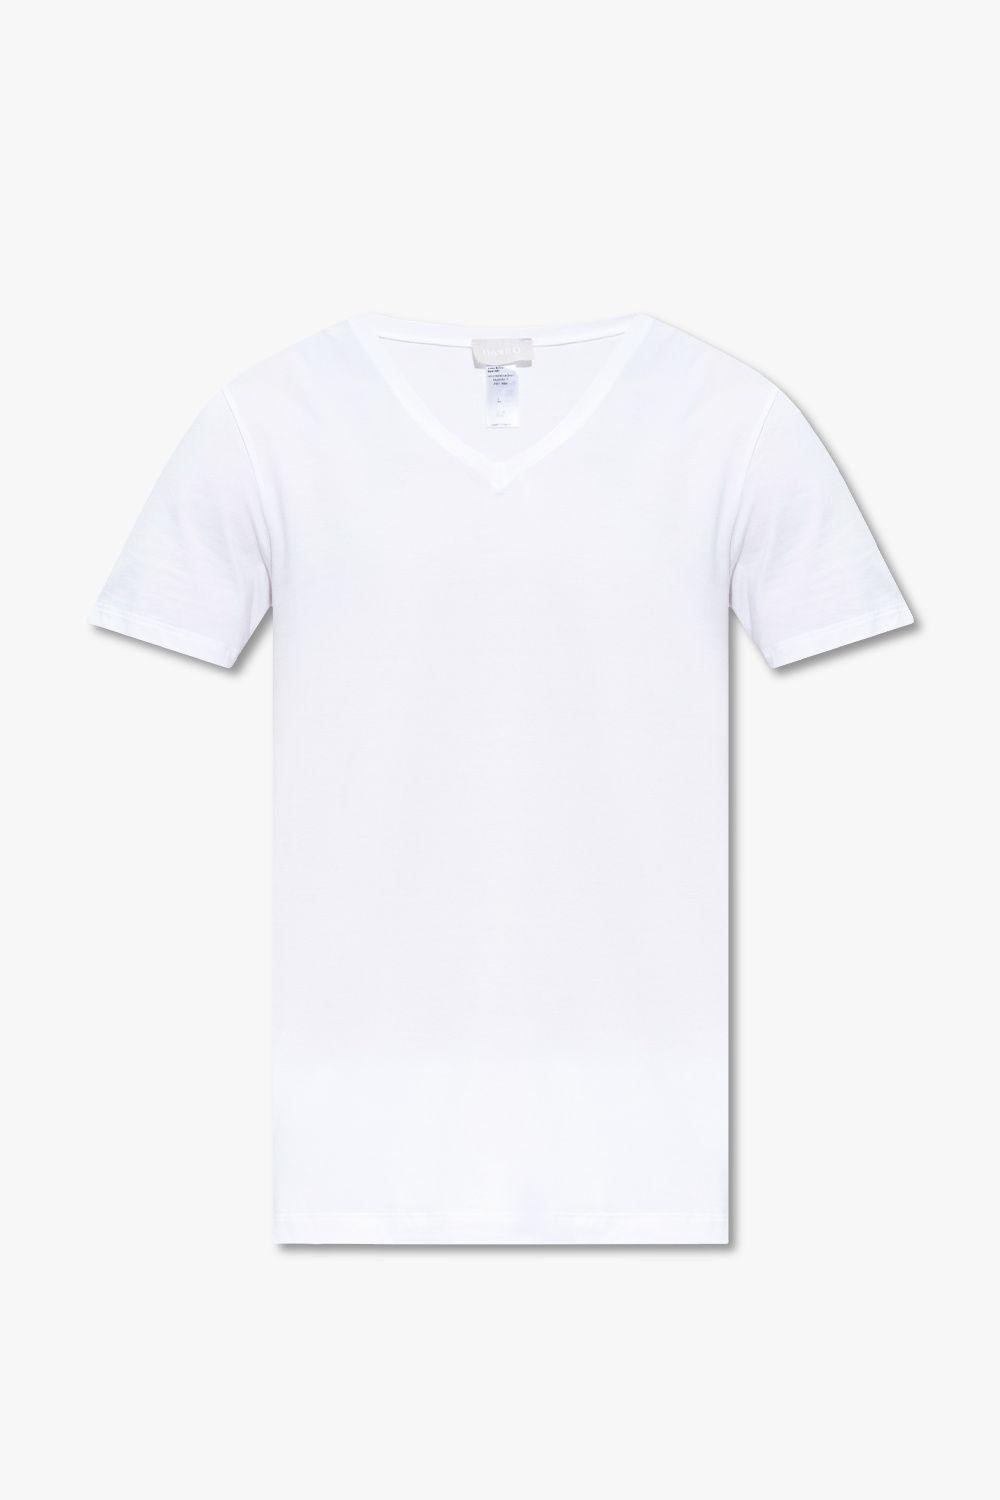 Hanro Cotton T-shirt in White | Lyst